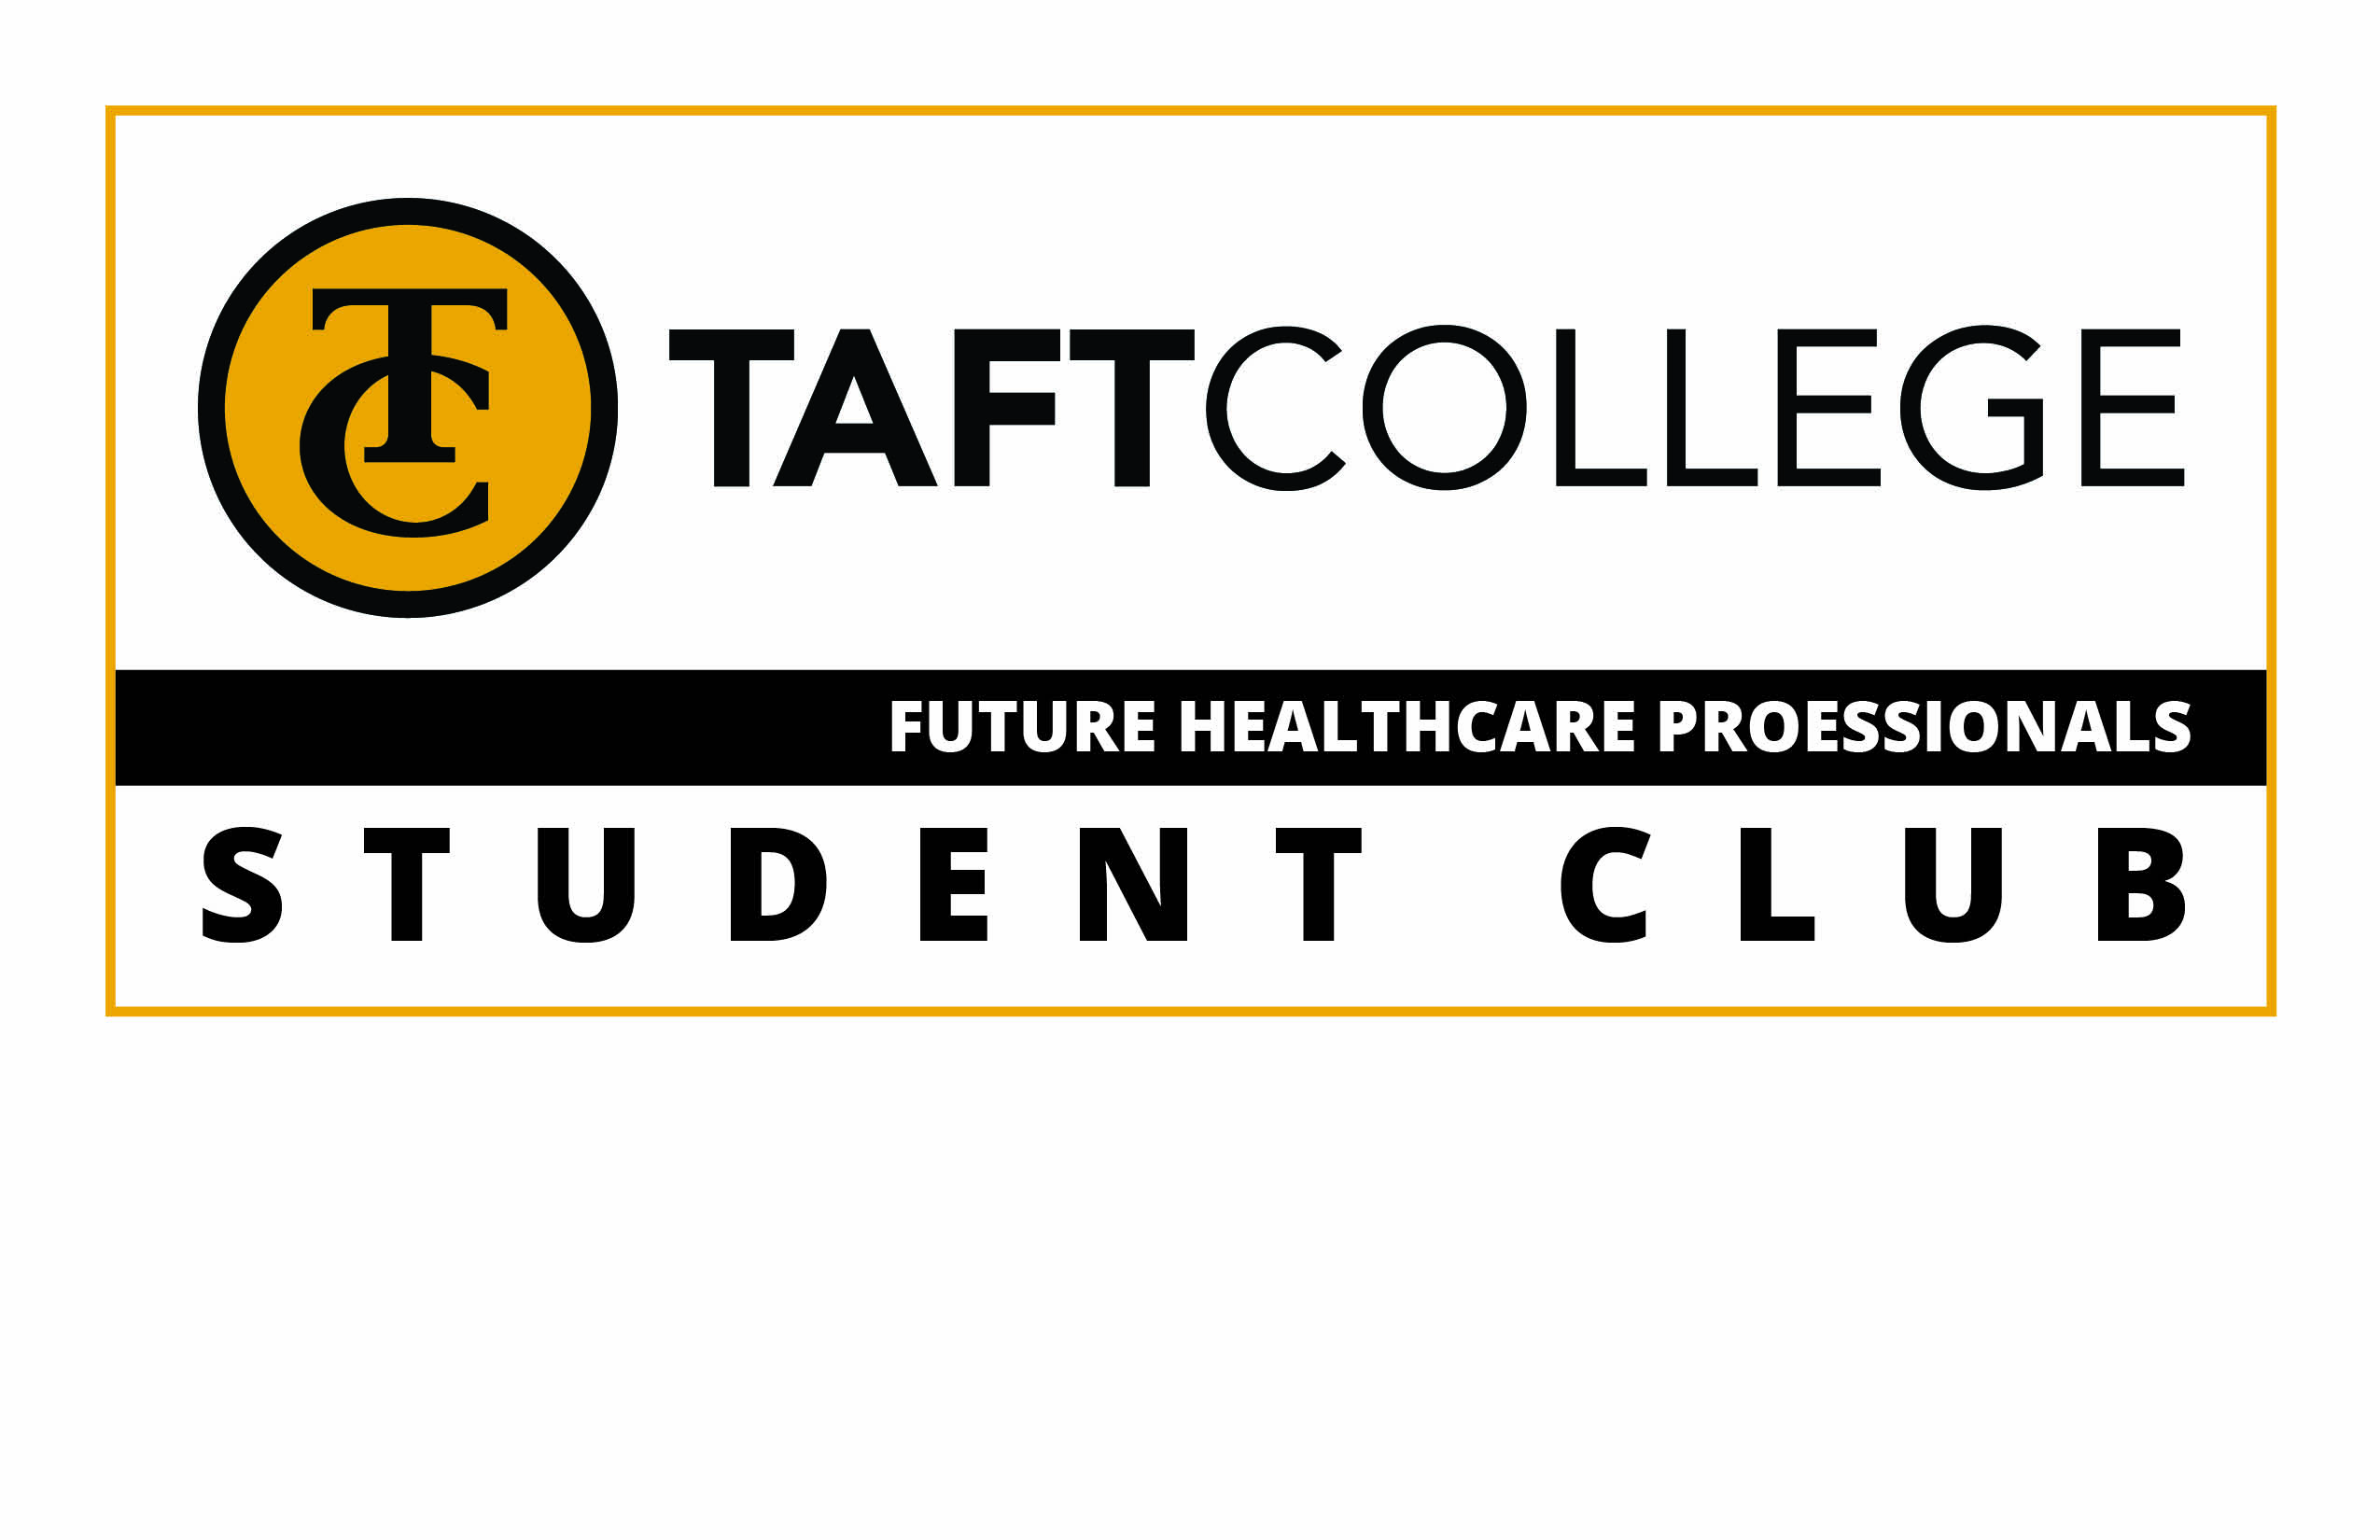 Future Healthcare Professionals Club logo